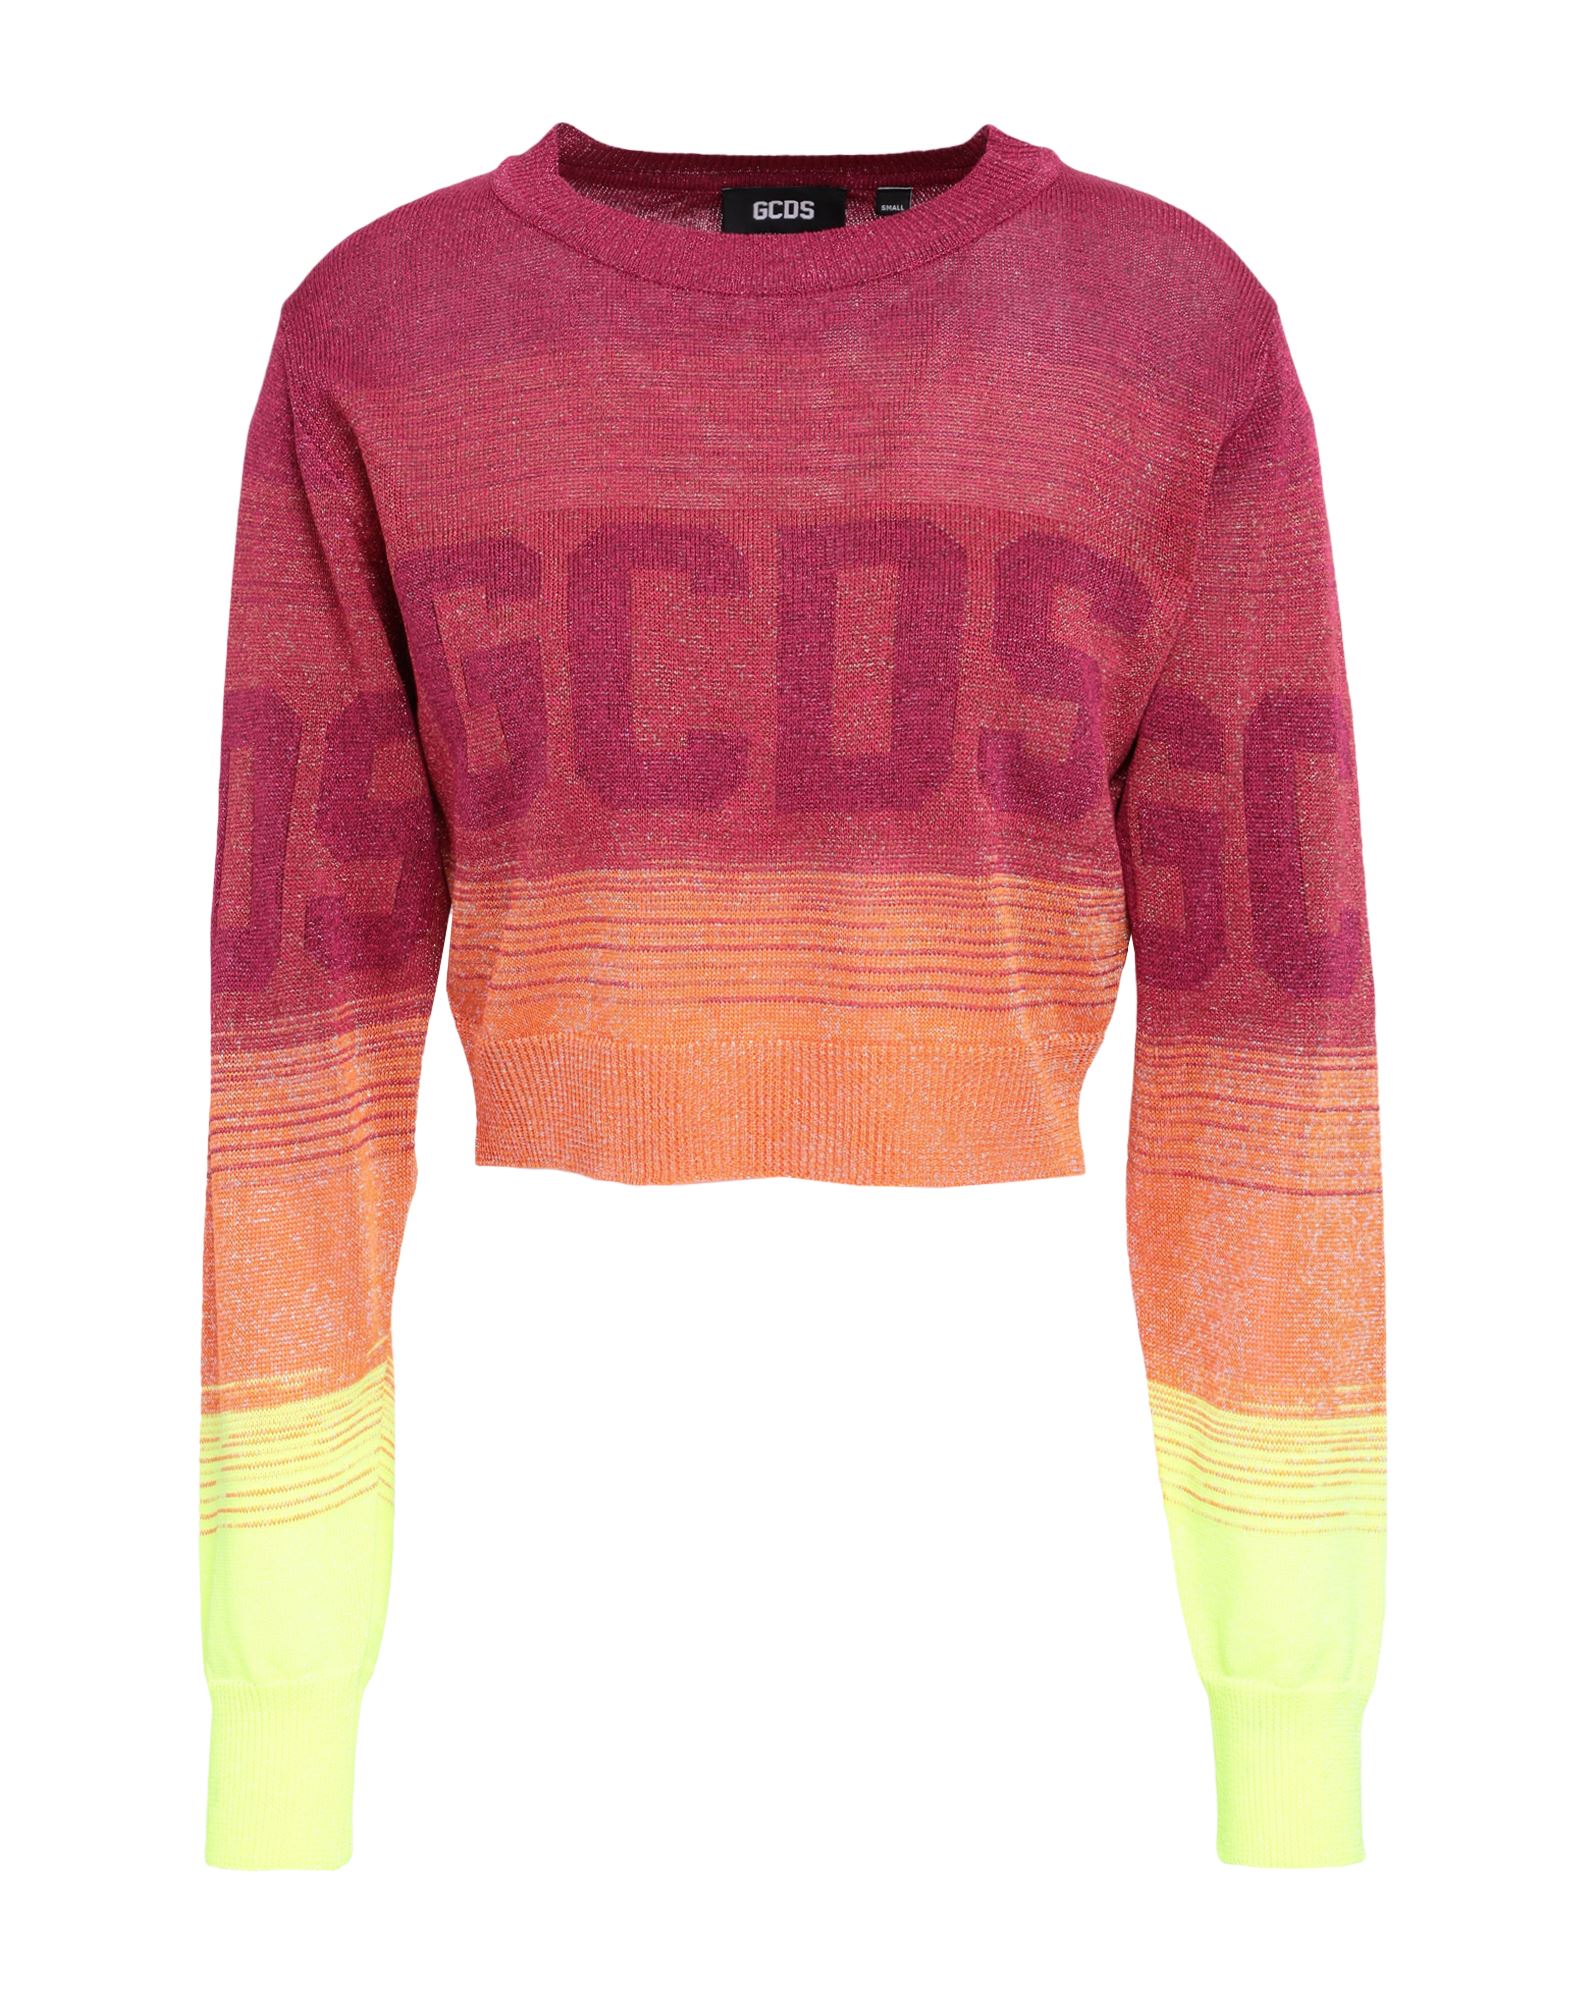 Gcds Woman Sweater Fuchsia Size L Viscose, Polyester, Metallic Fiber In Pink